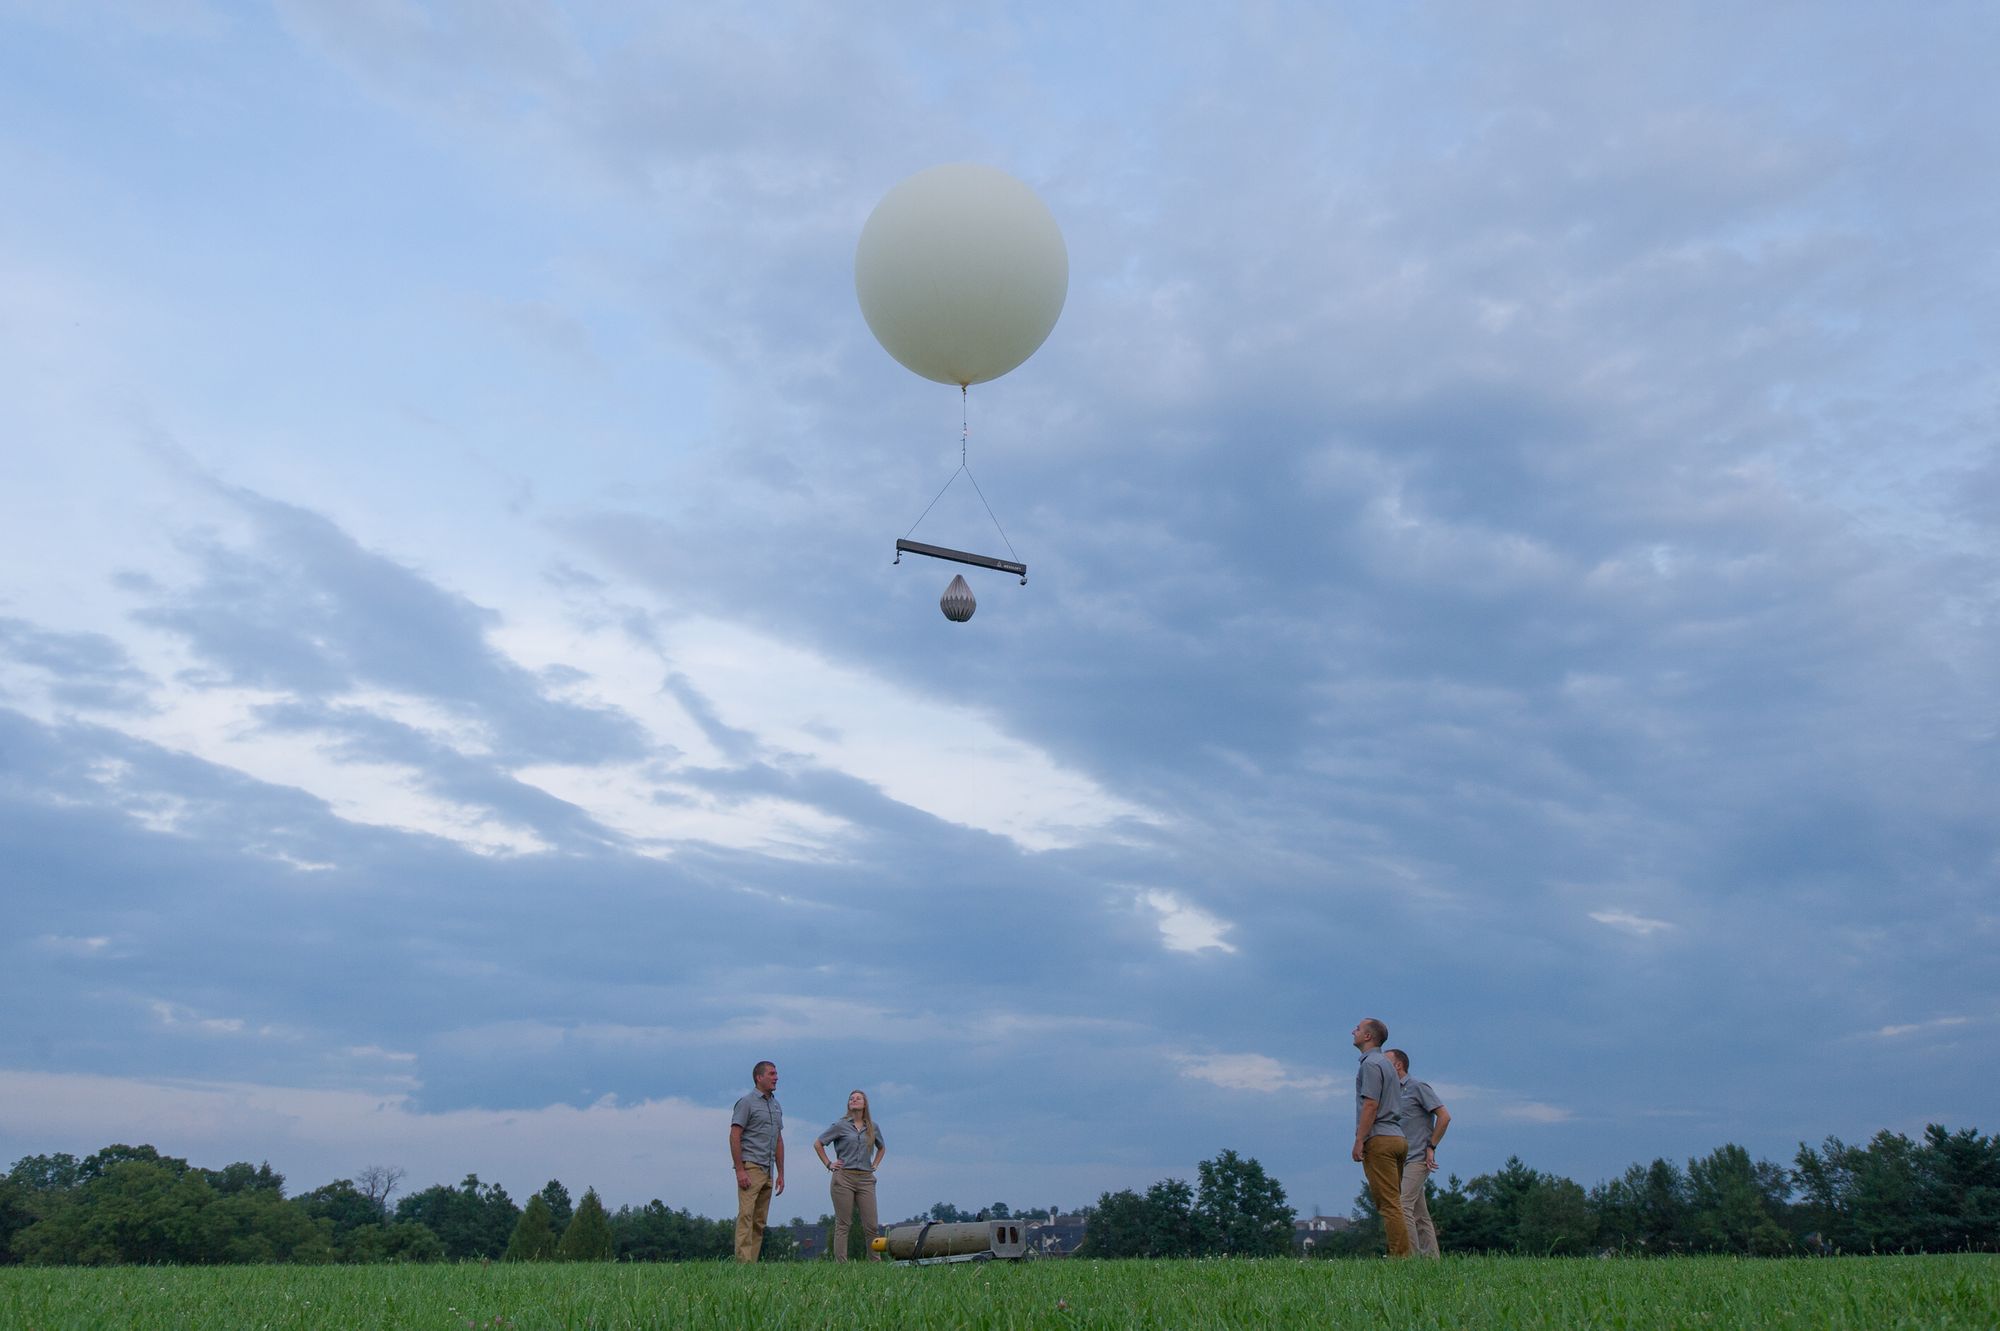 Mesoloft balloon launch